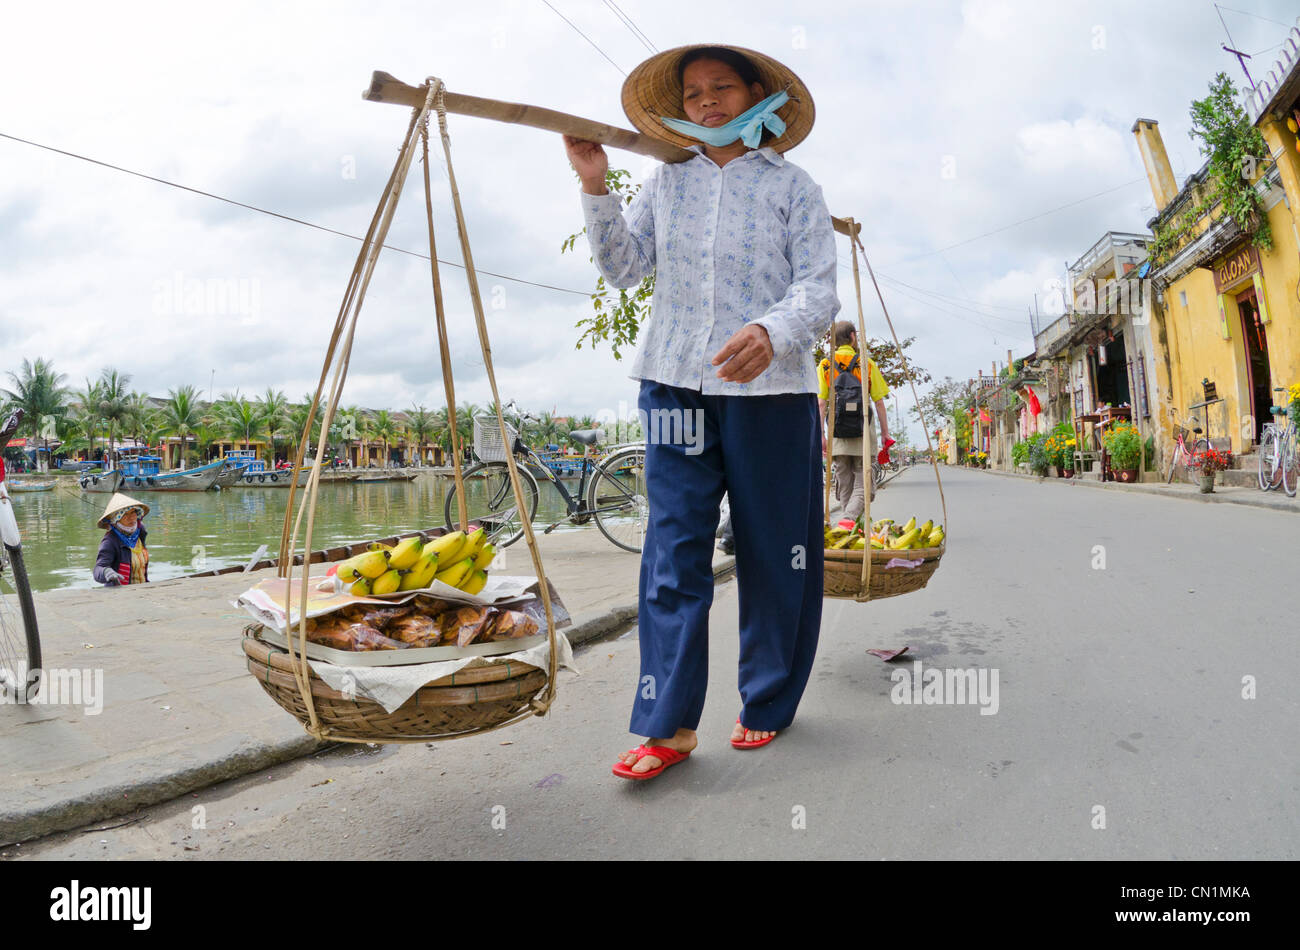 Woman carrying yoke baskets of fruit in street, Hoi An, Vietnam Stock Photo